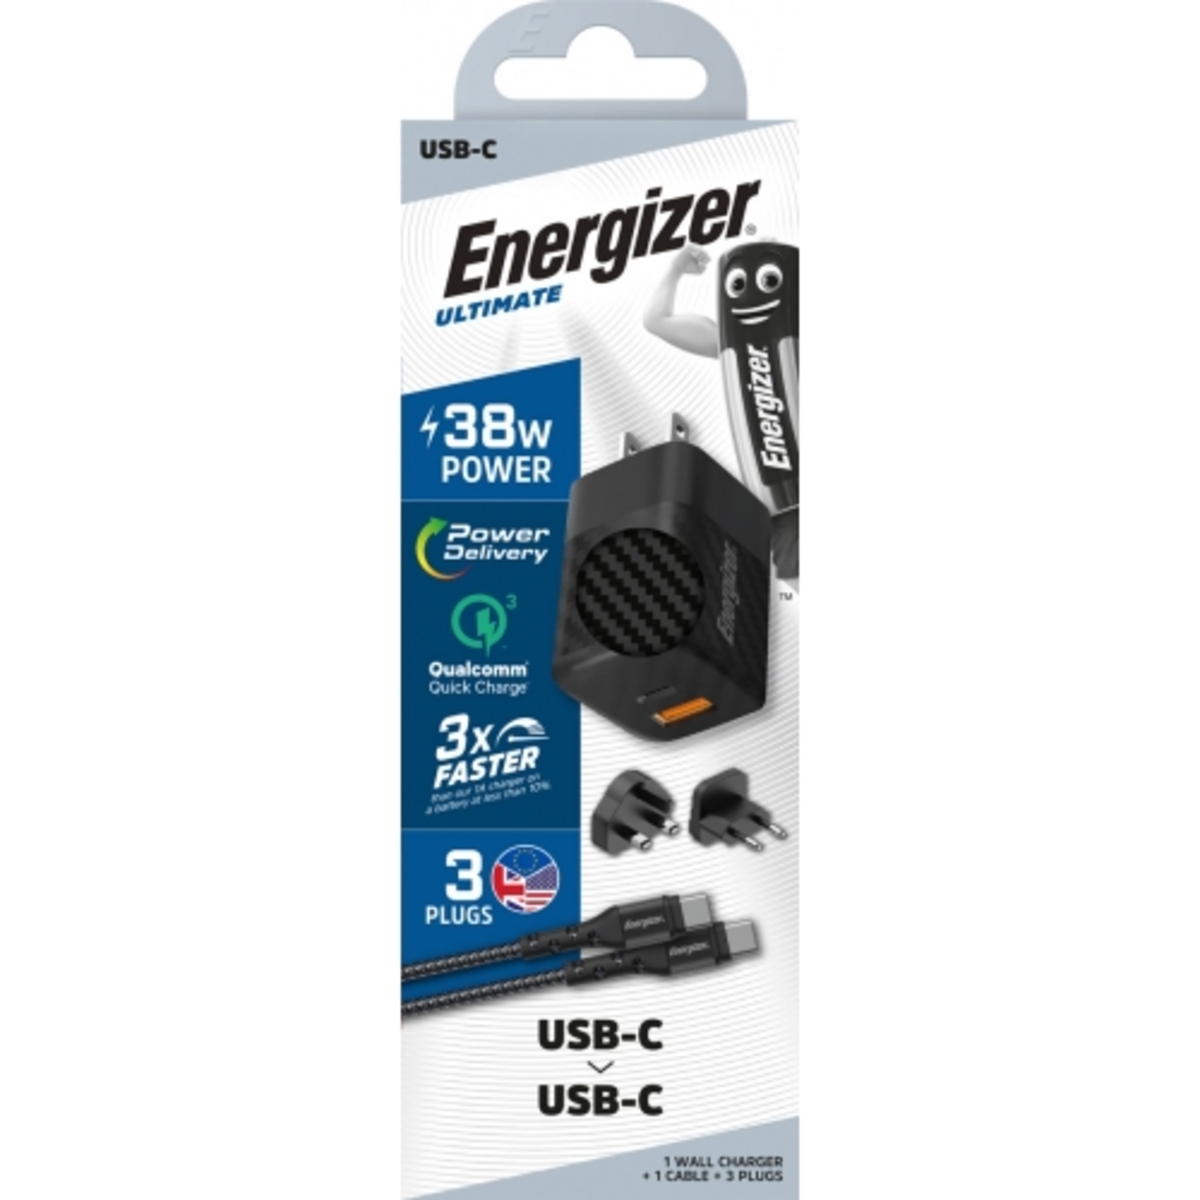 Energizer Ultimate Charger 38W - PD20W + QC3 18W - USB-C / USB-C - EU / UK / US